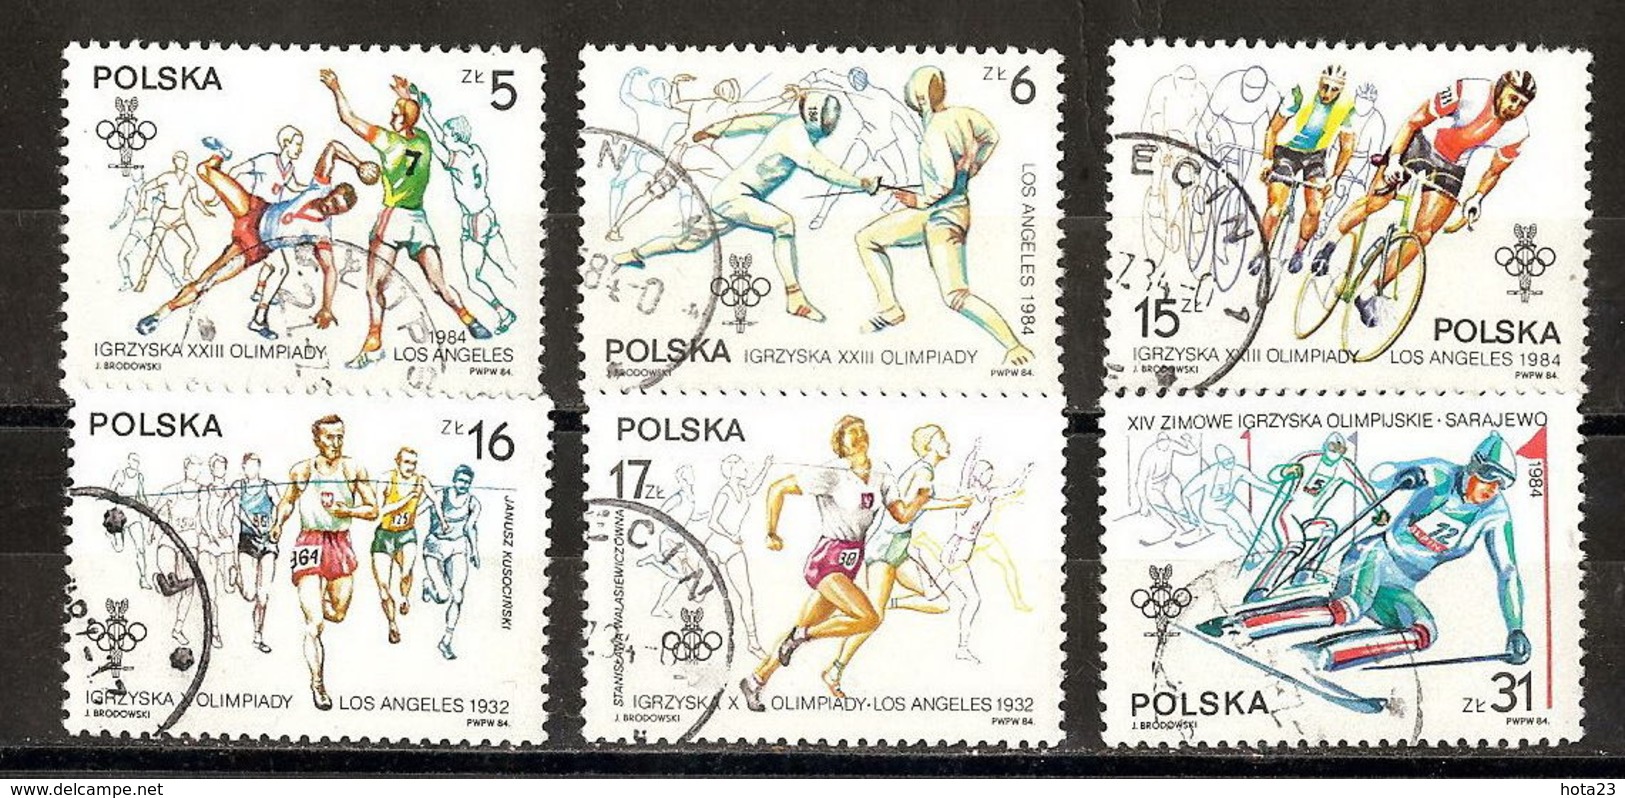 POLAND 1984 OLYMPIC GAMES SARAJEVO AND LOS ANGELES SET USED (20 - 339 = 2017) - Postage Due